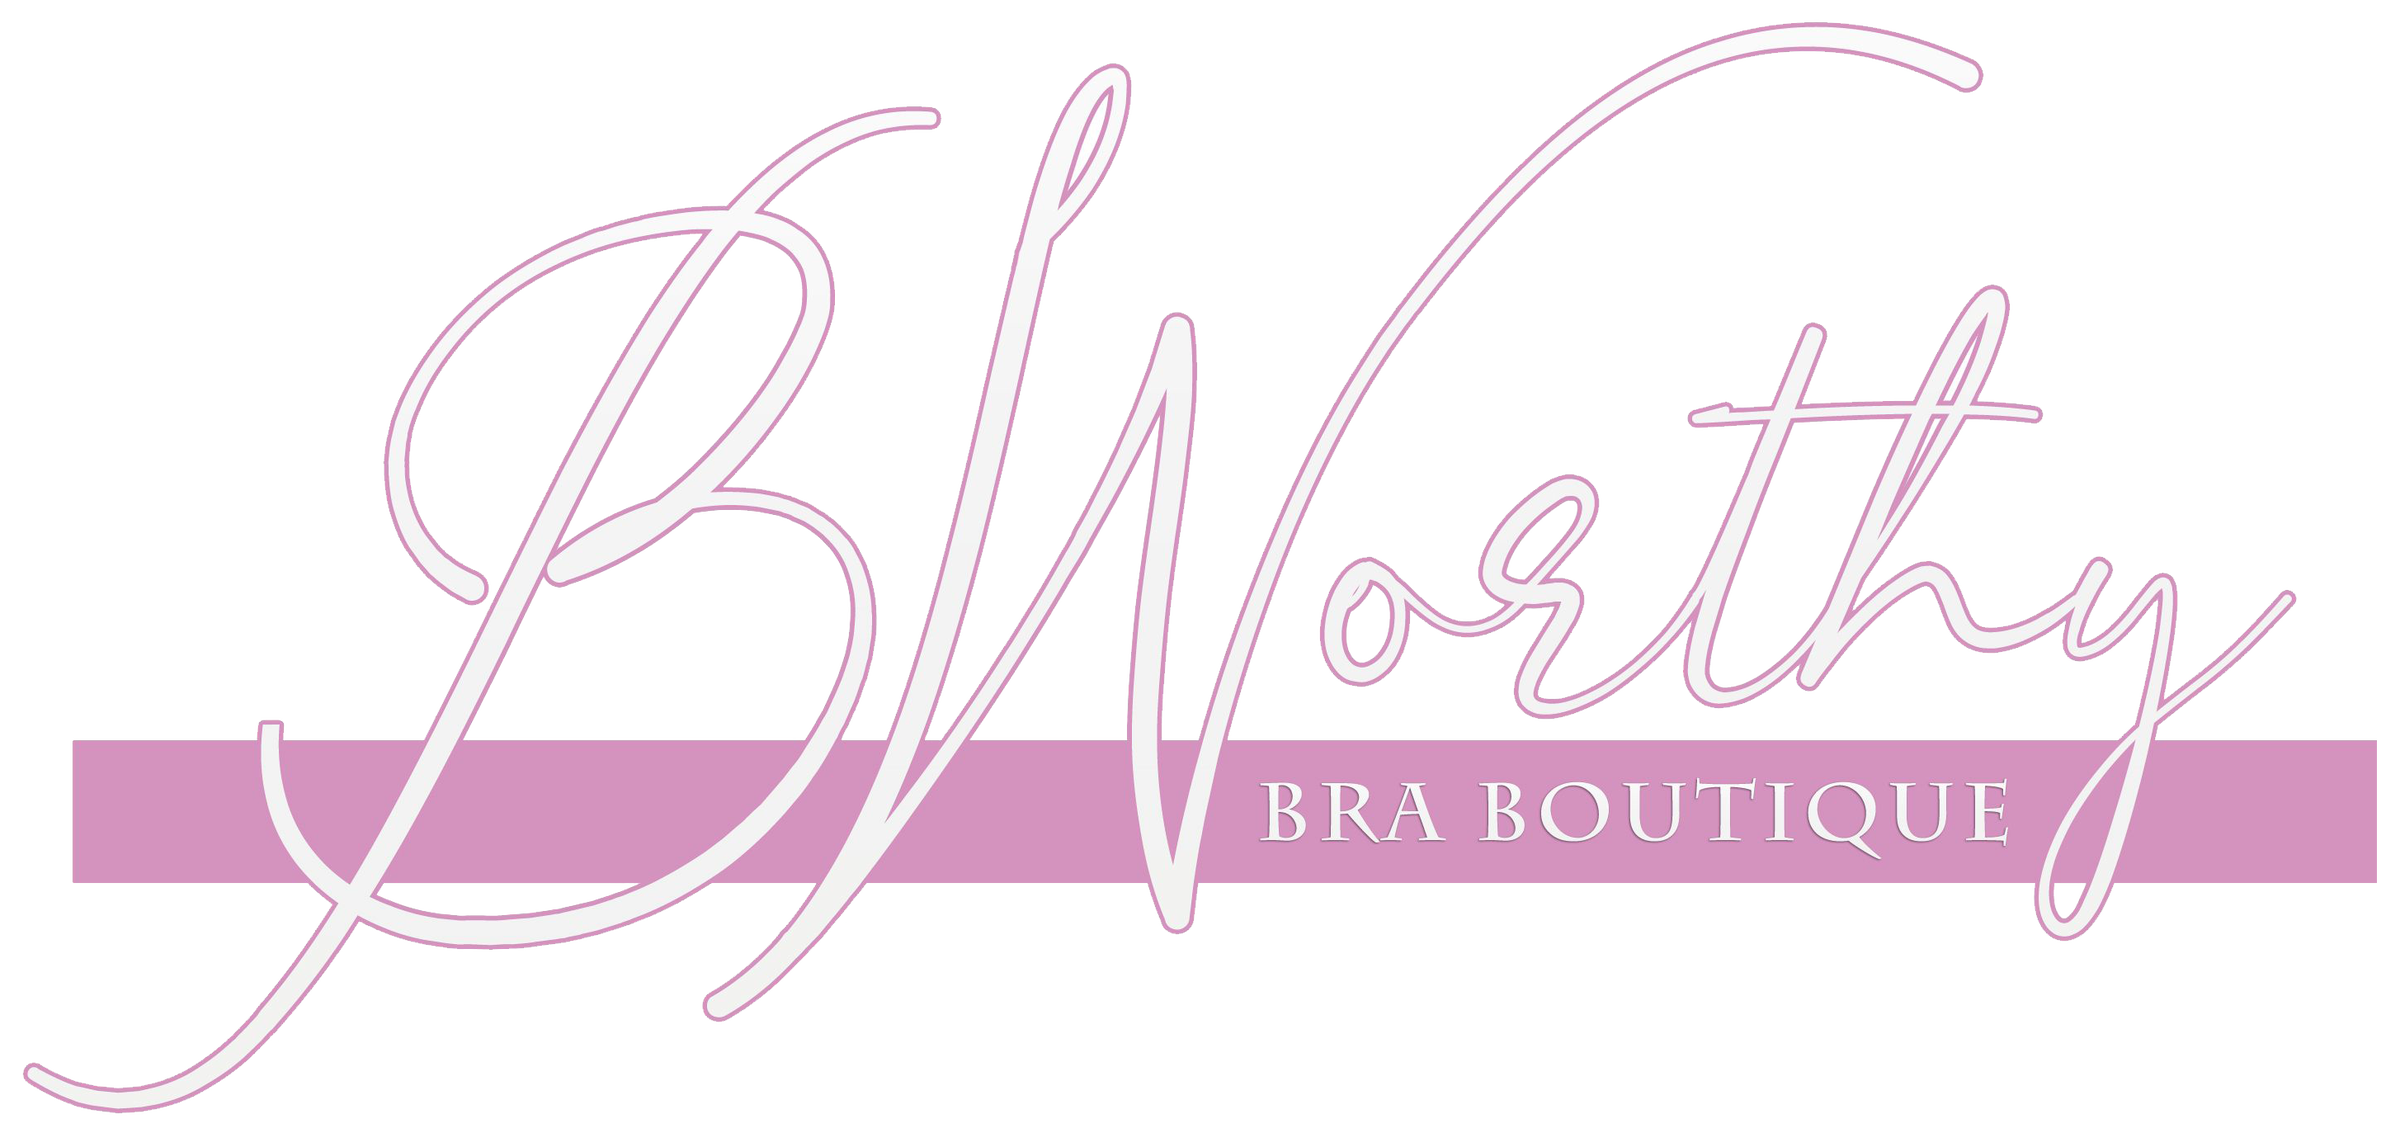 BWorthy Bra Boutique